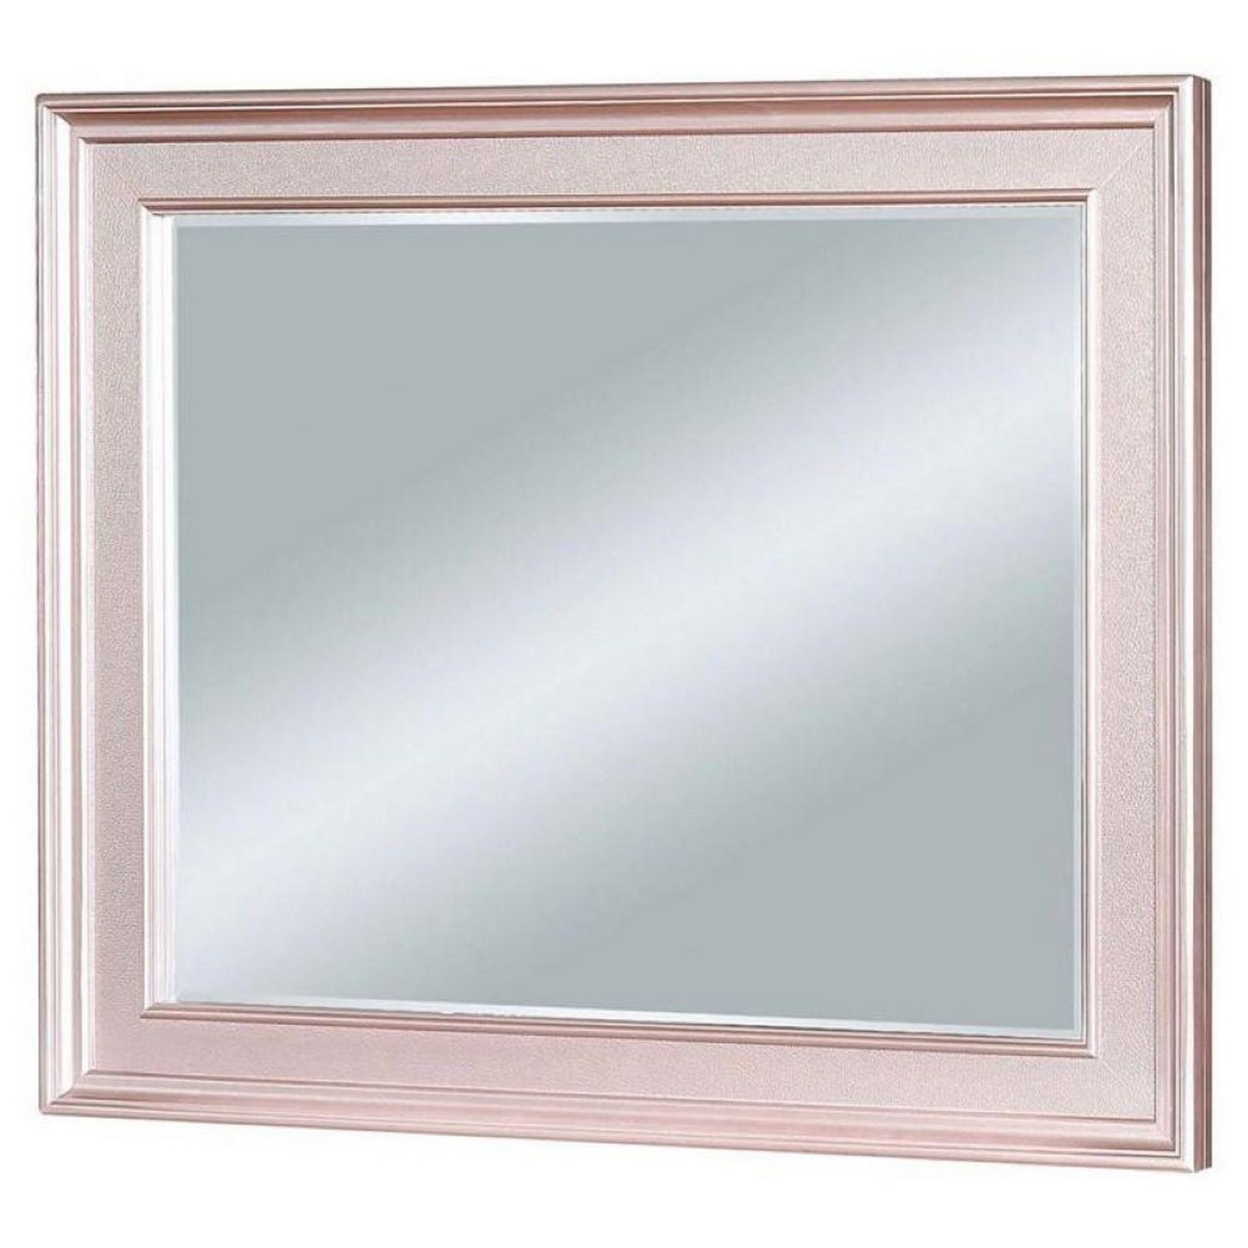 64 Inch Contemporary Style Wooden Frame Mirror, Rose Pink- Saltoro Sherpi